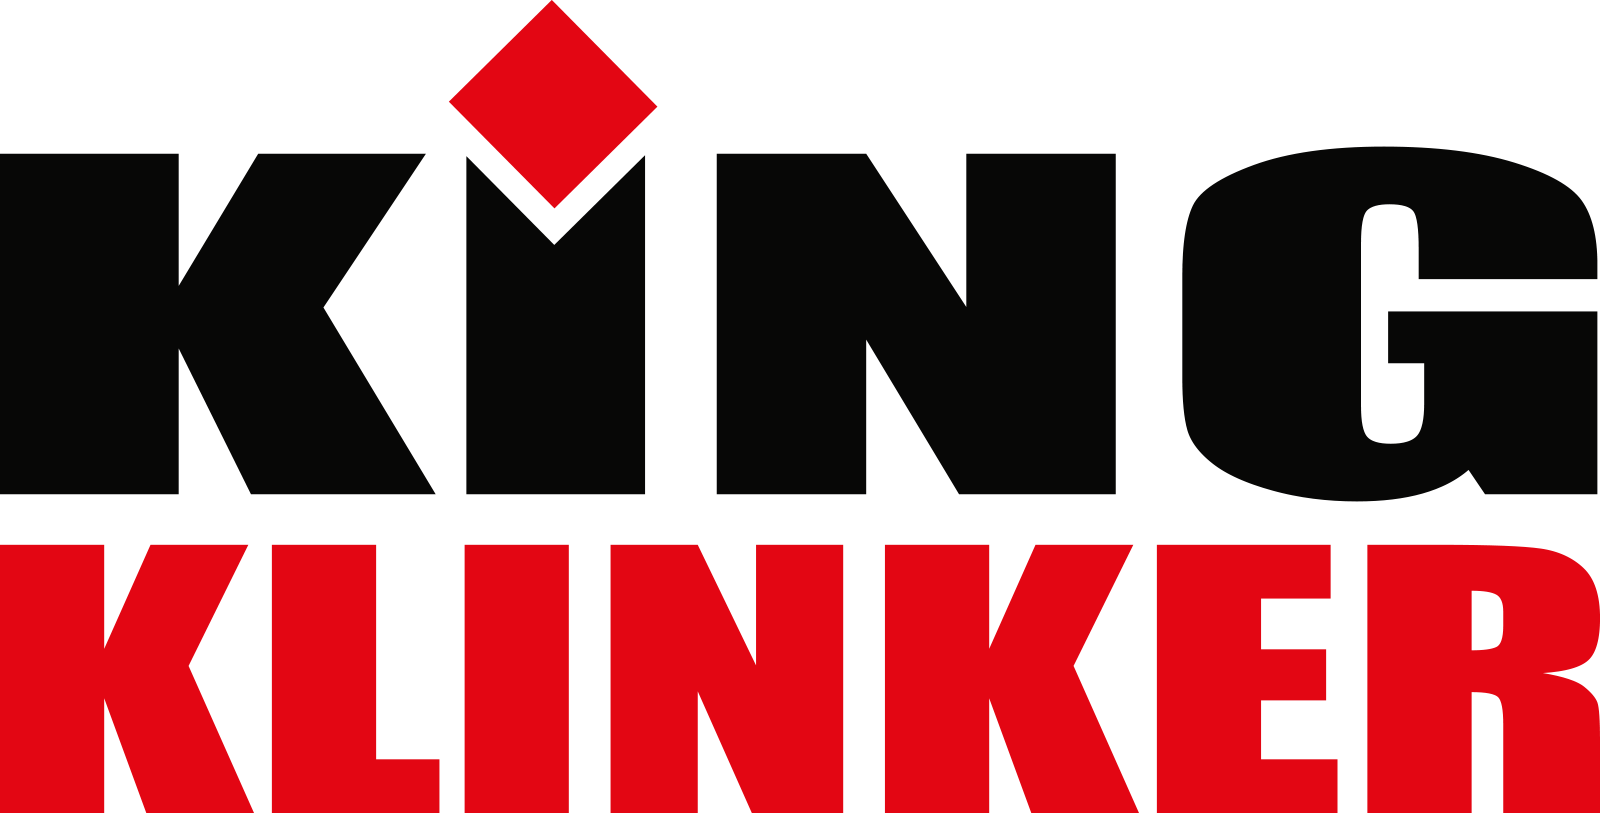 King Klinker - logo WEB 72.png